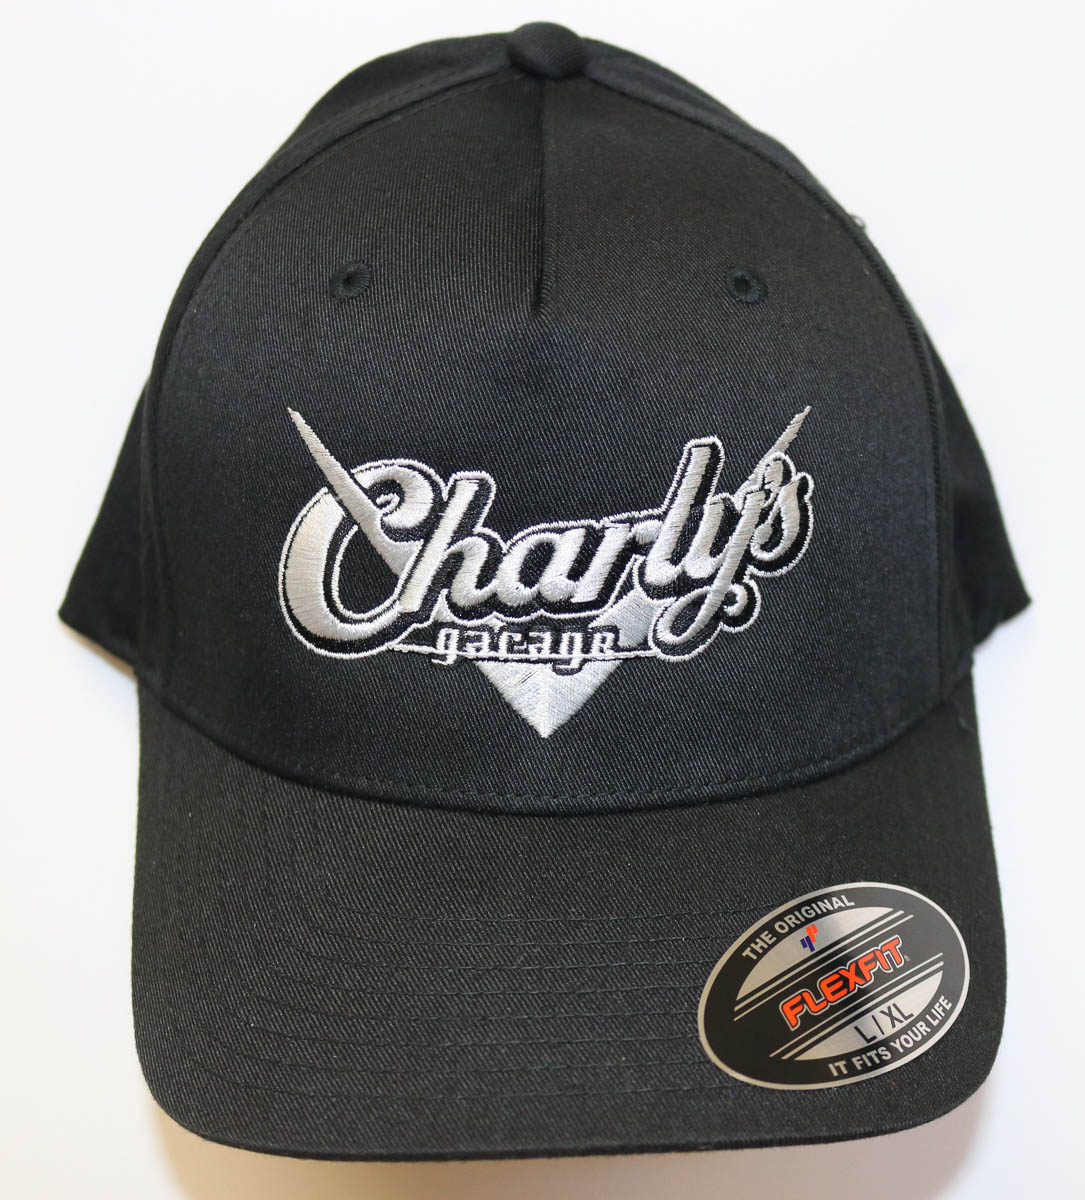 Hat Cadillac - Charly's Garage